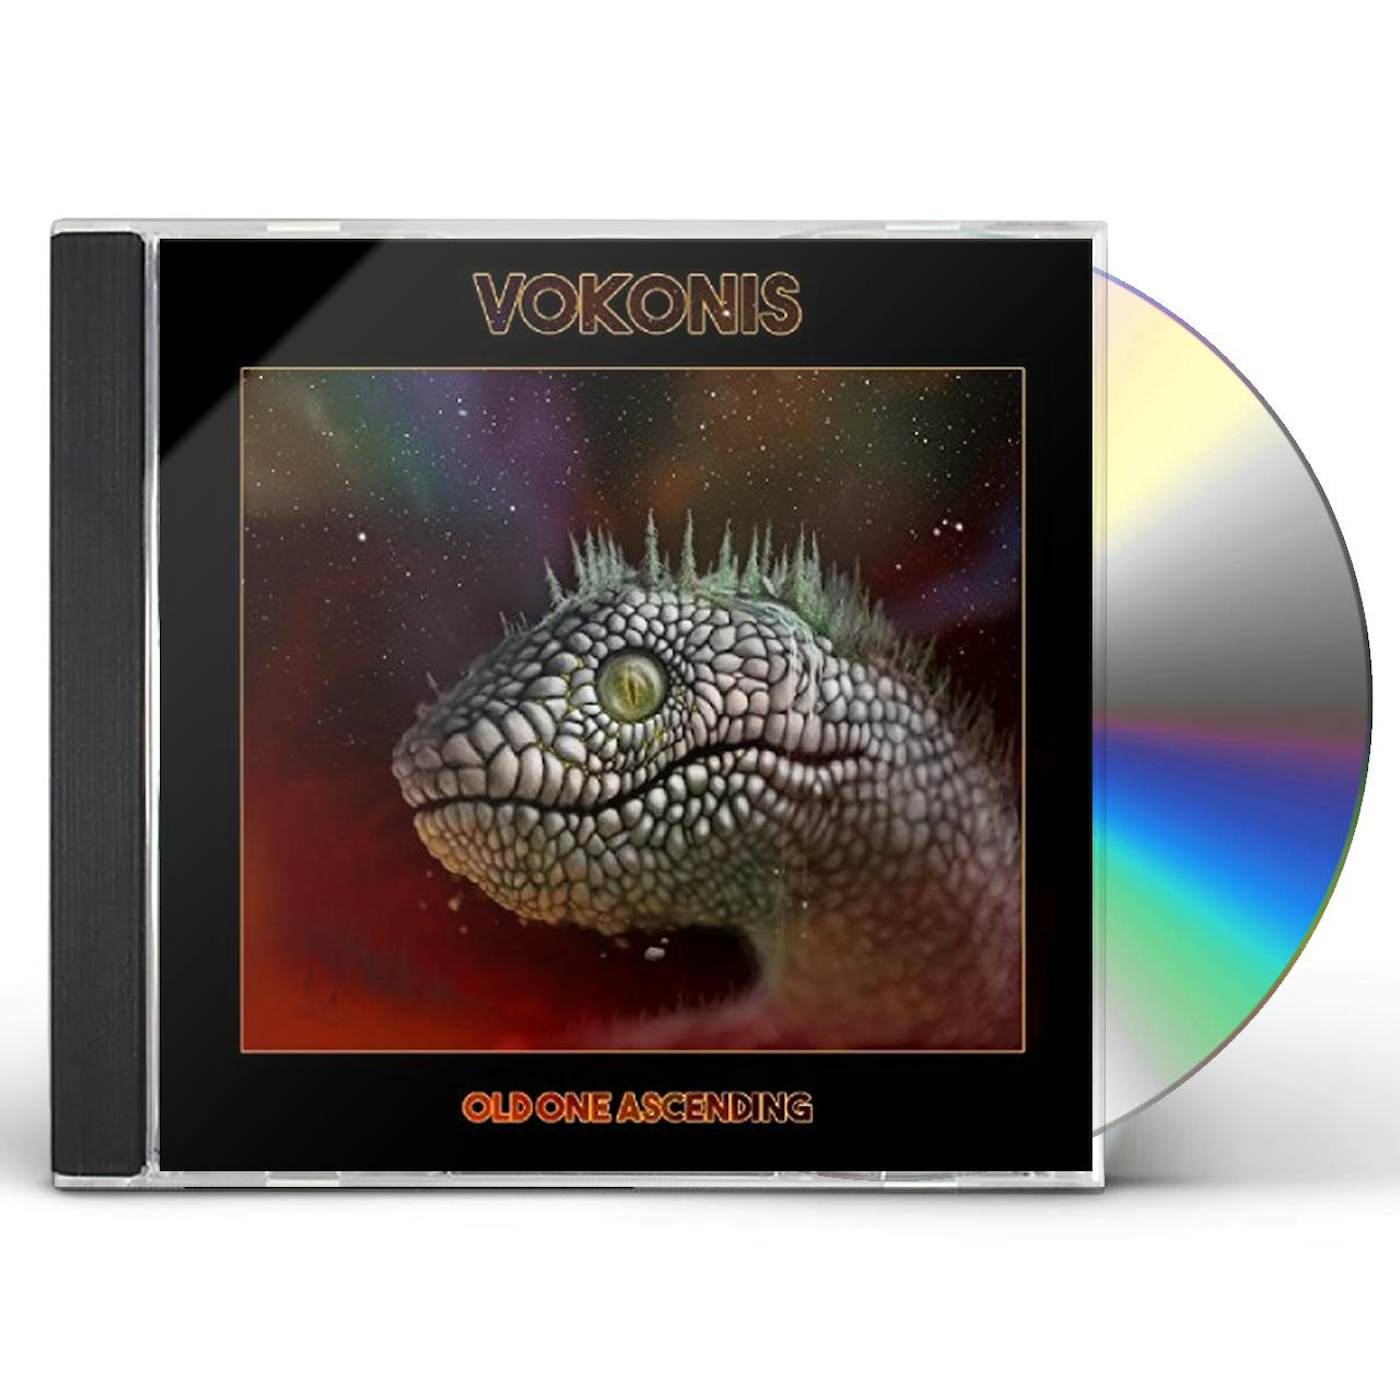 Vokonis OLDE ONE ASCENDING CD